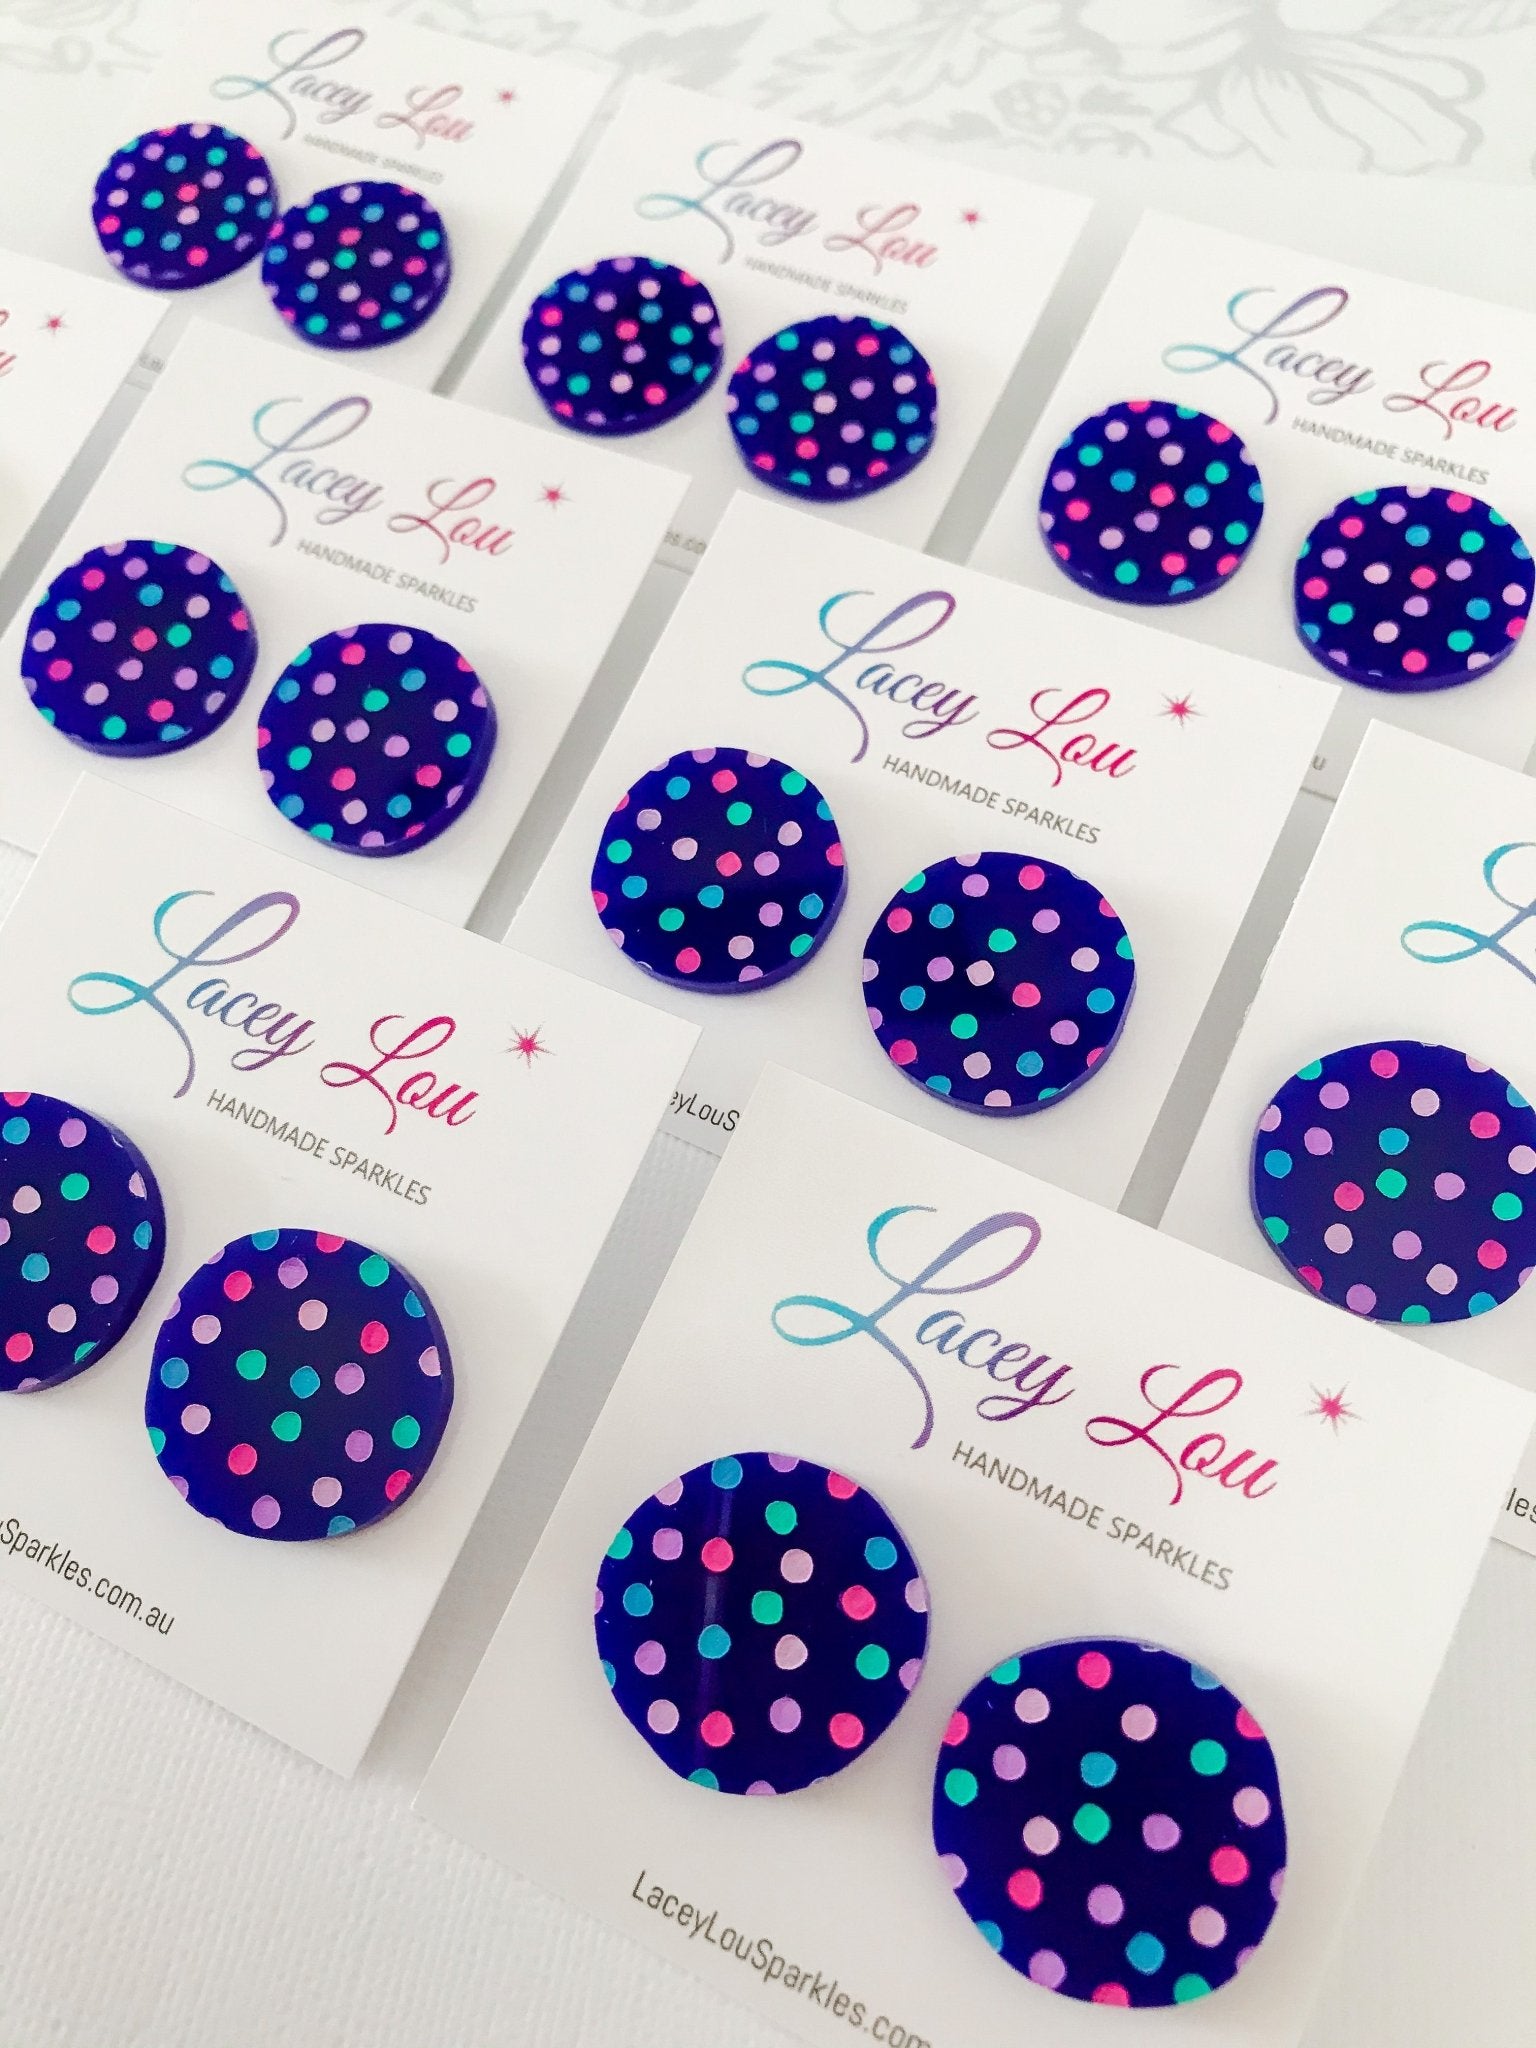 Navy Blue Dotty Acrylic Studs - Bright Dots - Lacey Lou Sparkles